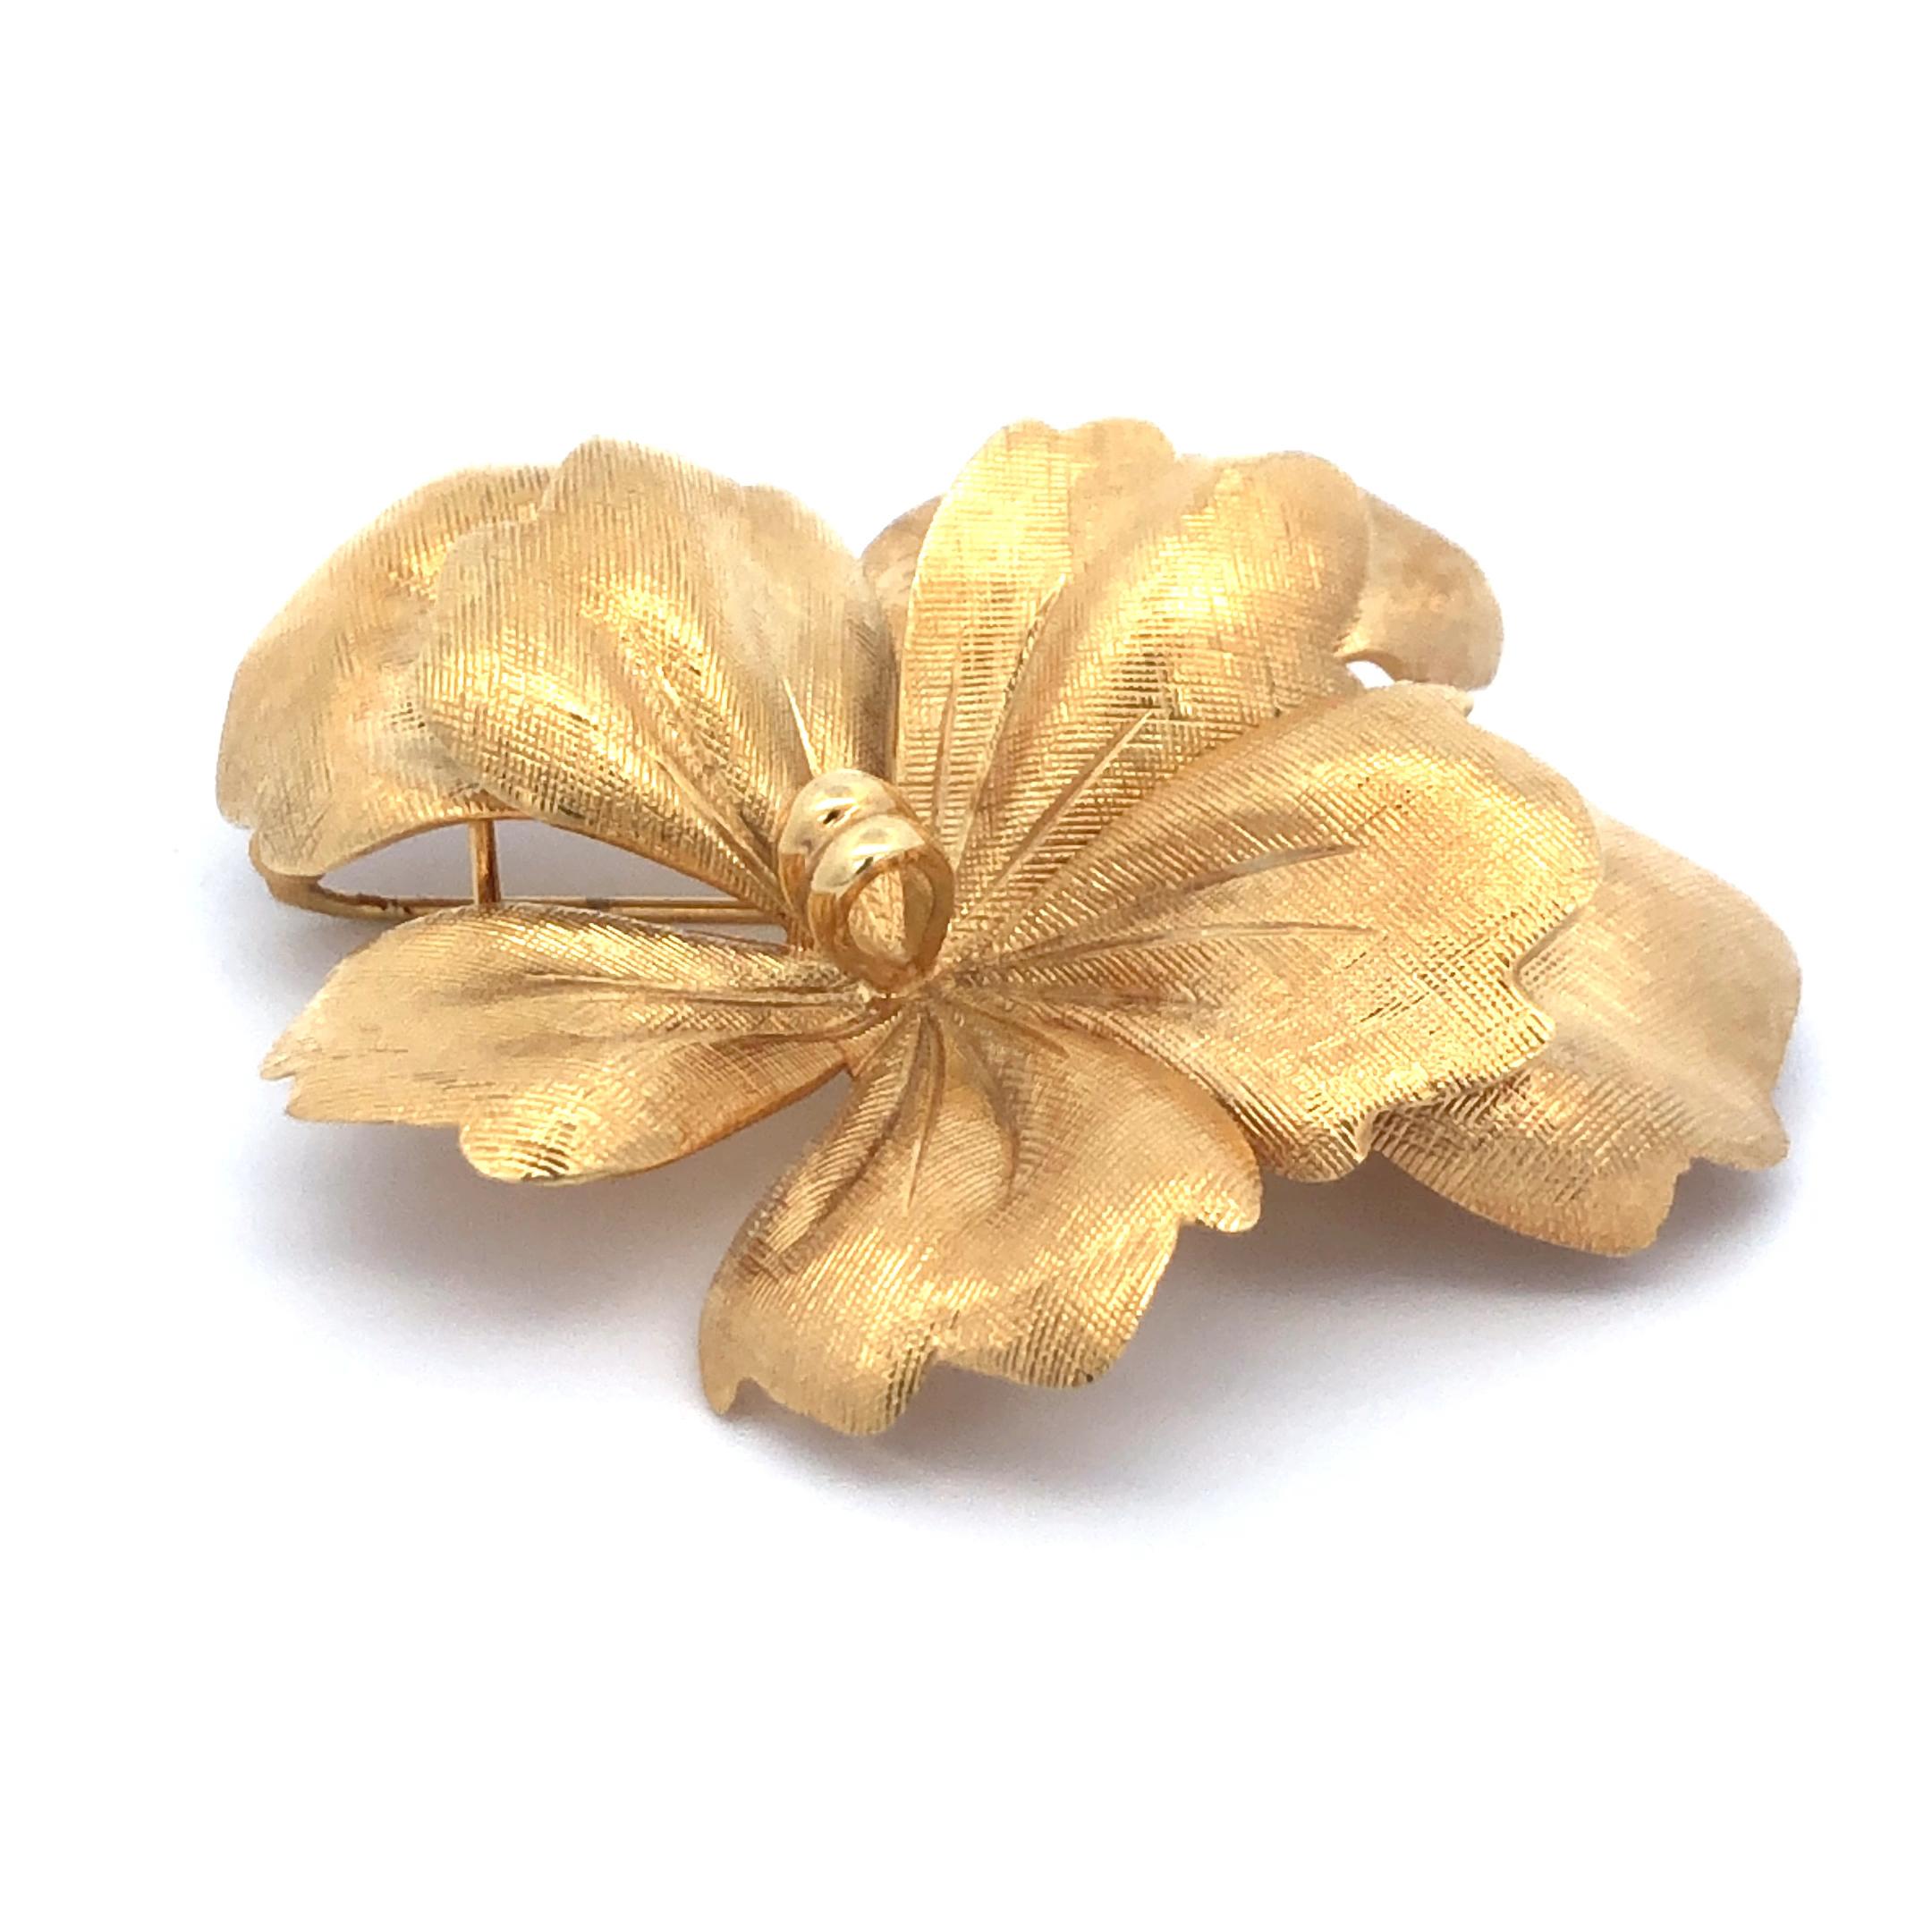 Tiffany Flower Brooch 14K Yellow Gold. The Broch measures 2